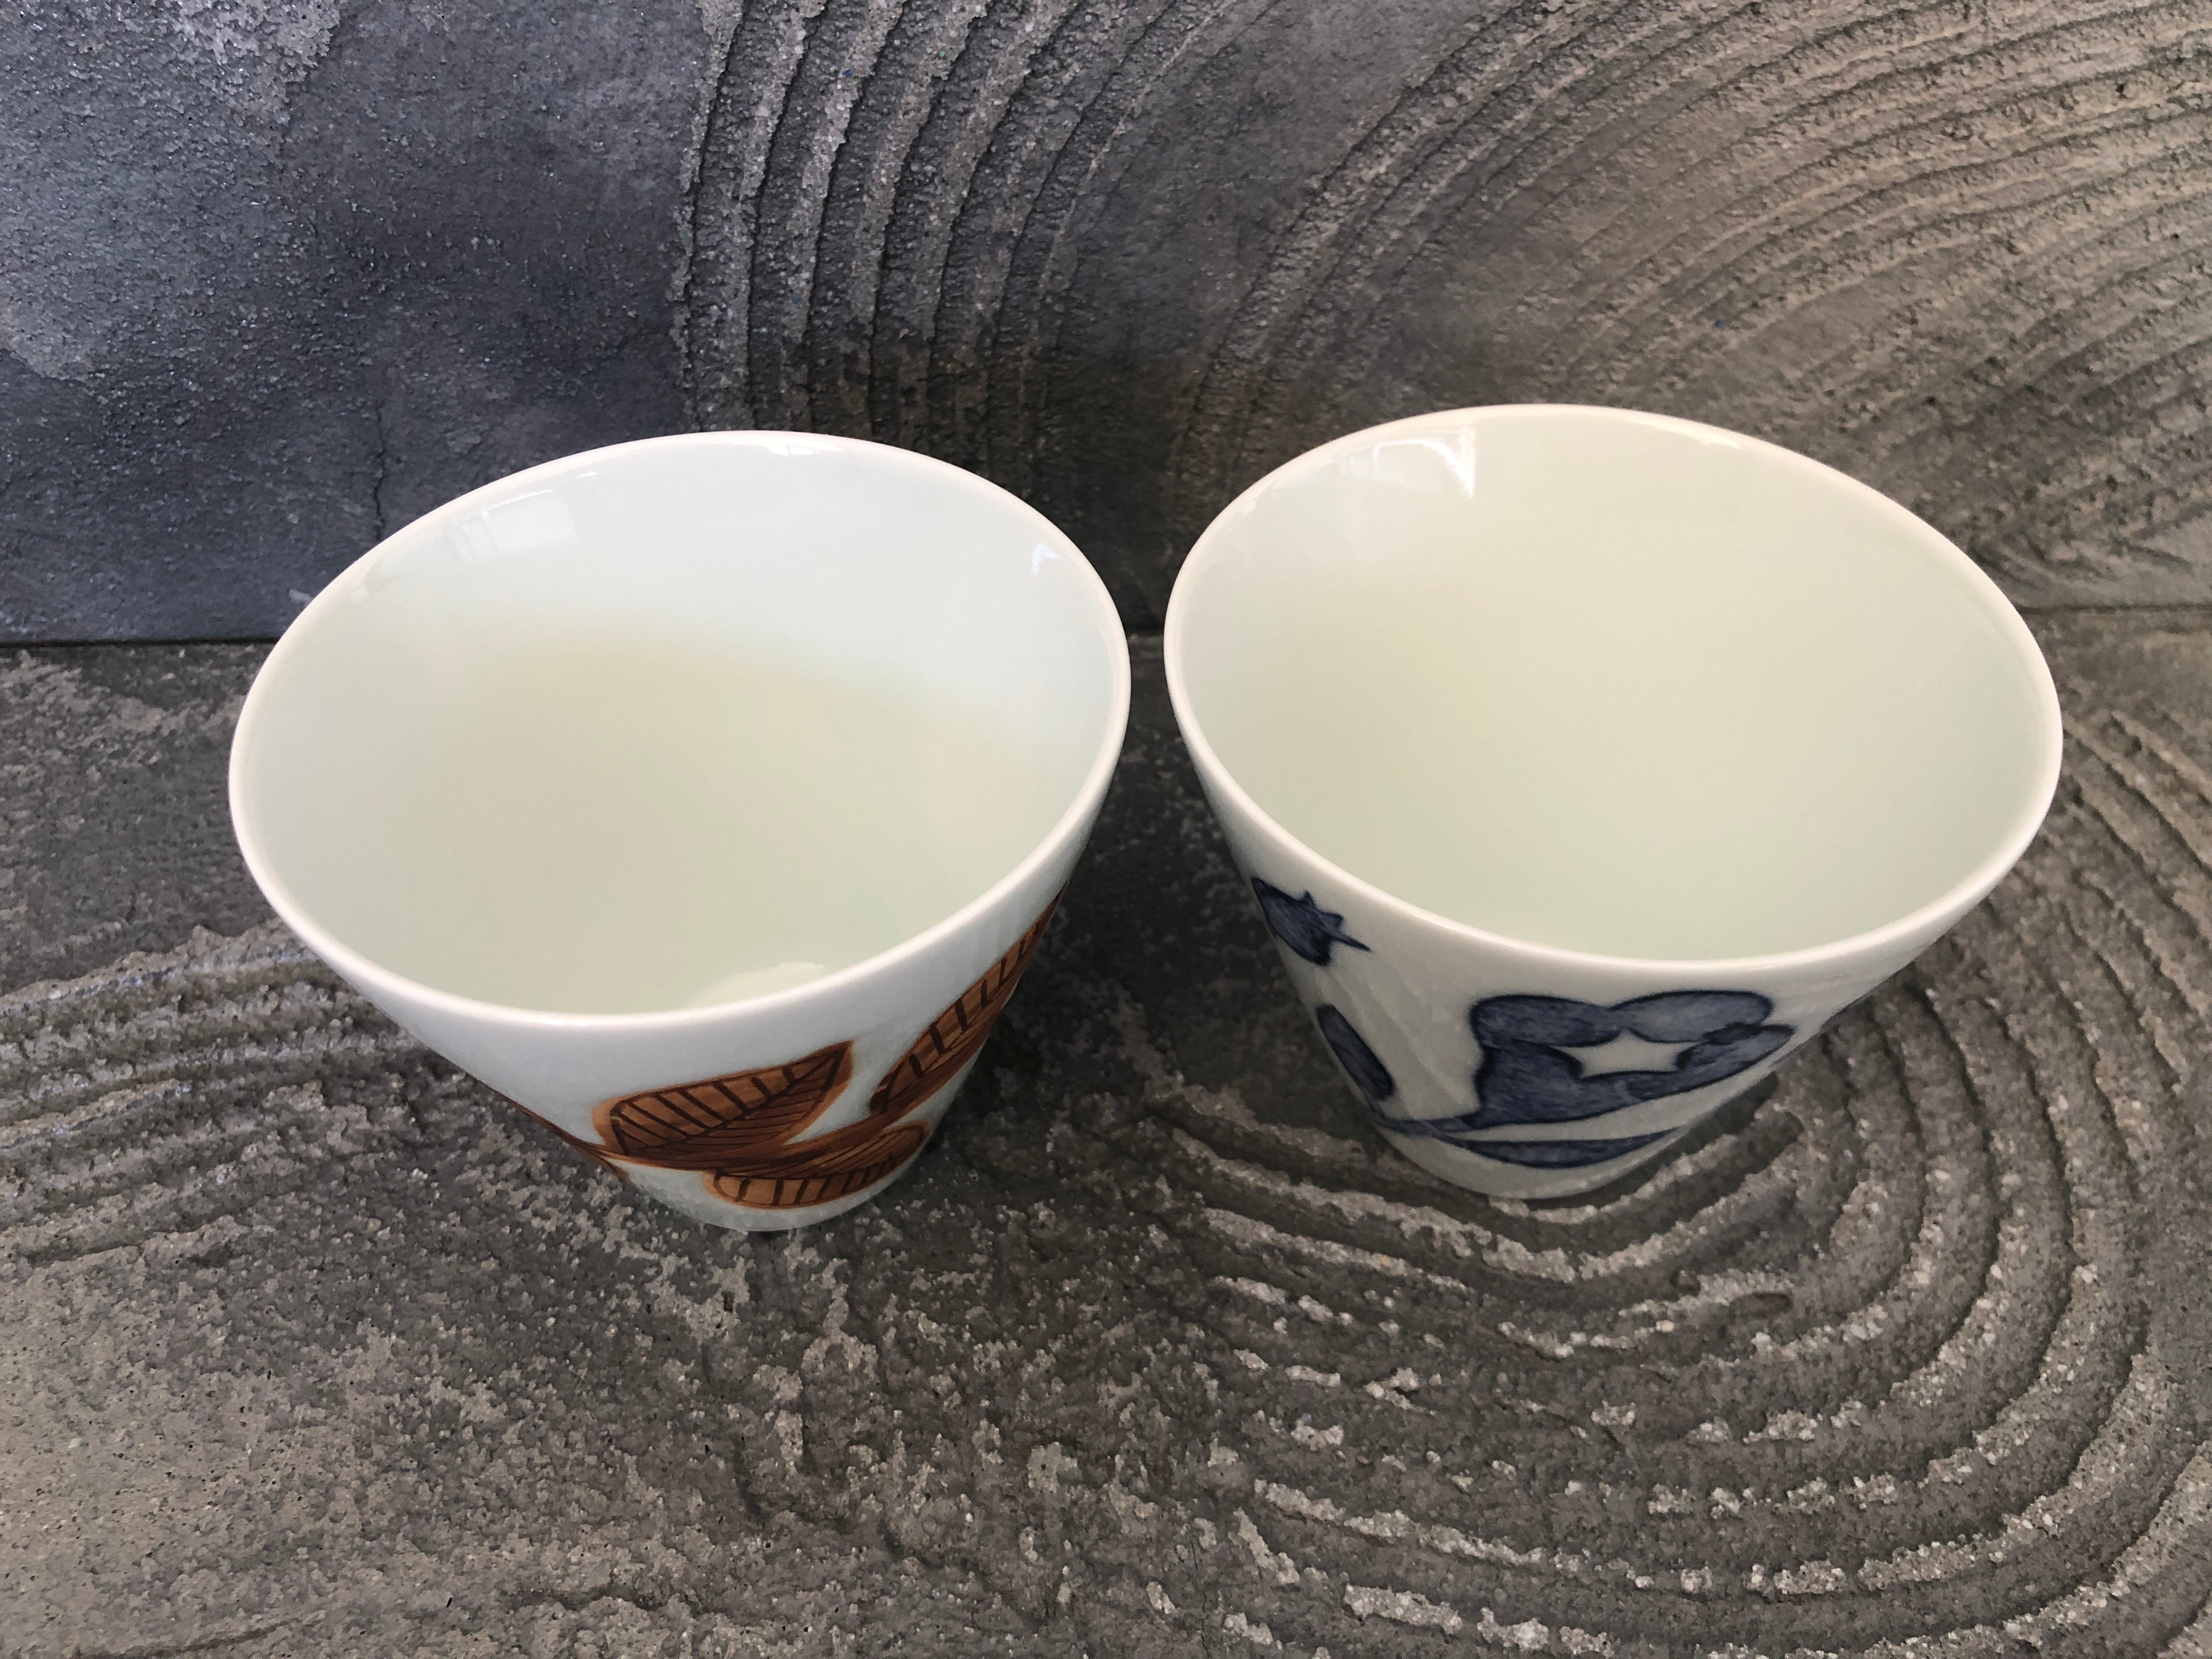 Pebble Ceramic Design Studio【福岡】石原亮太　オープンカップS